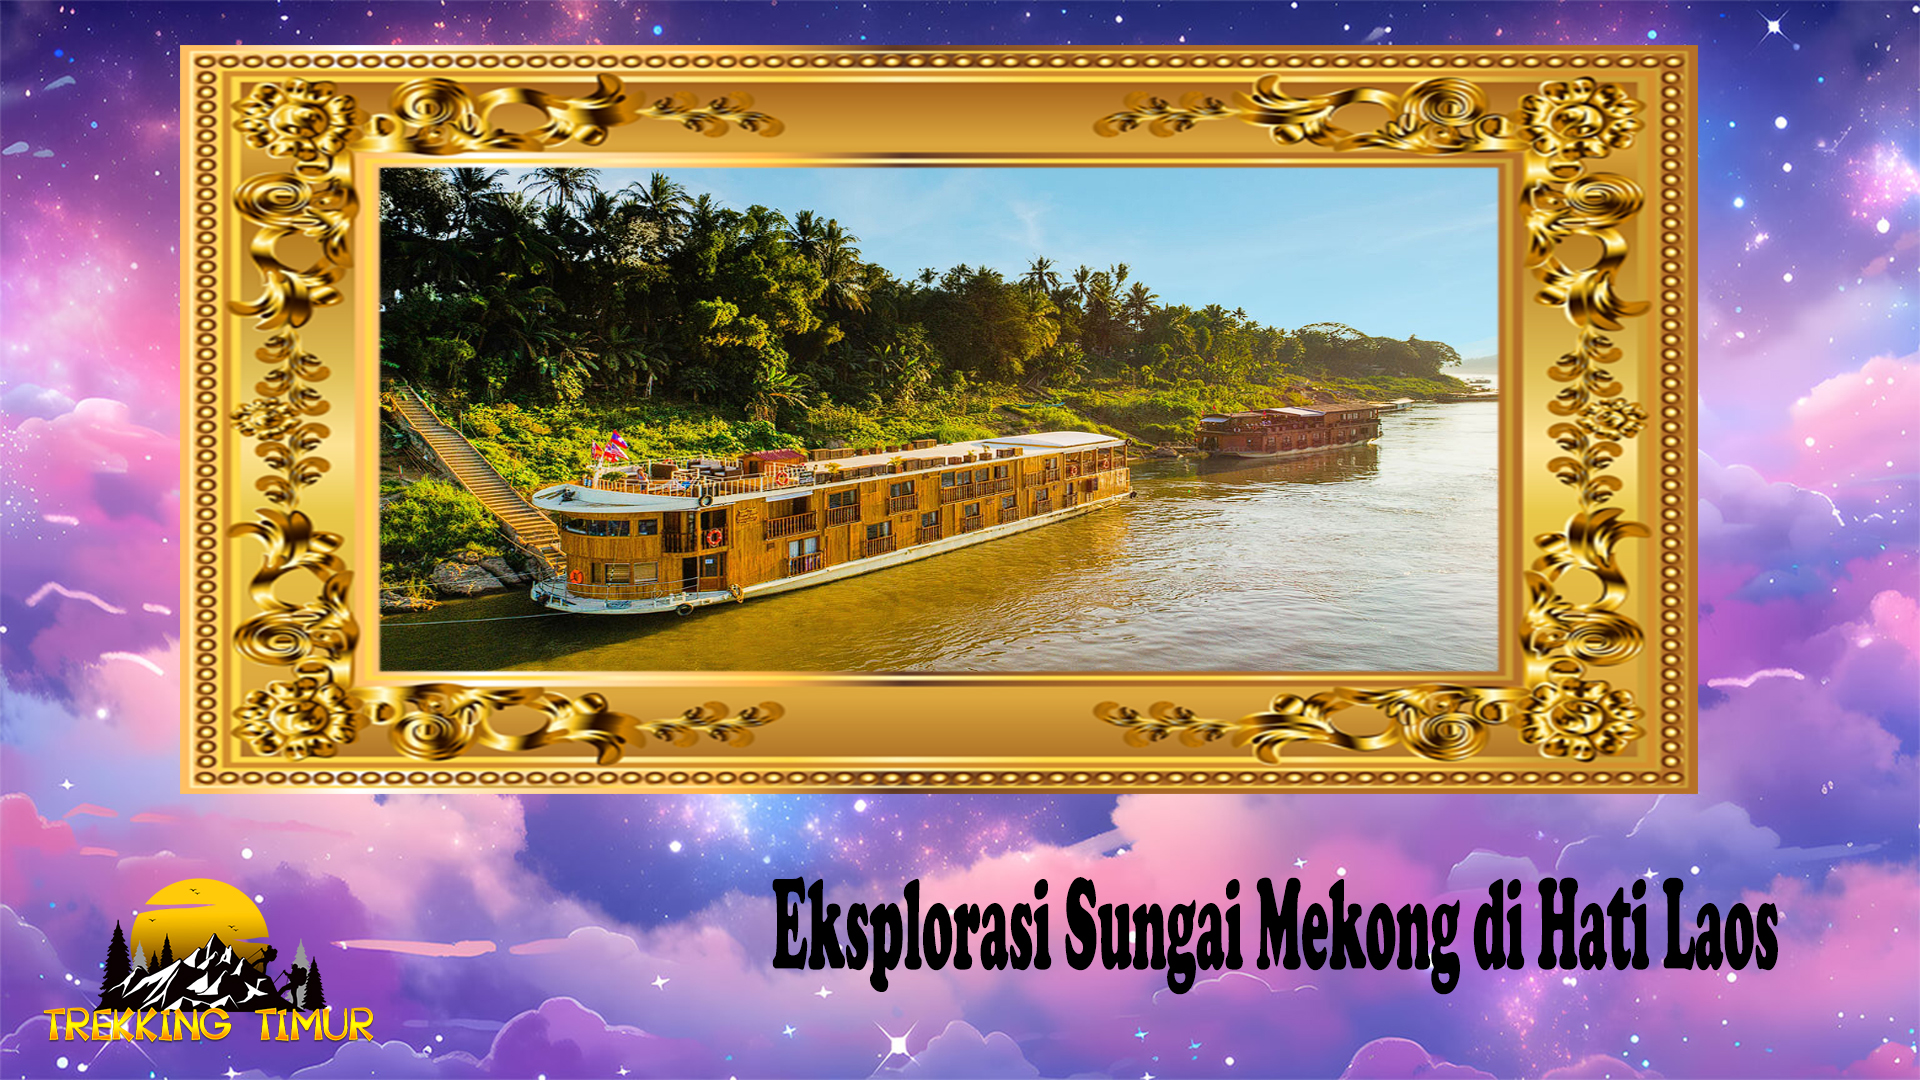 Eksplorasi Sungai Mekong di Hati Laos